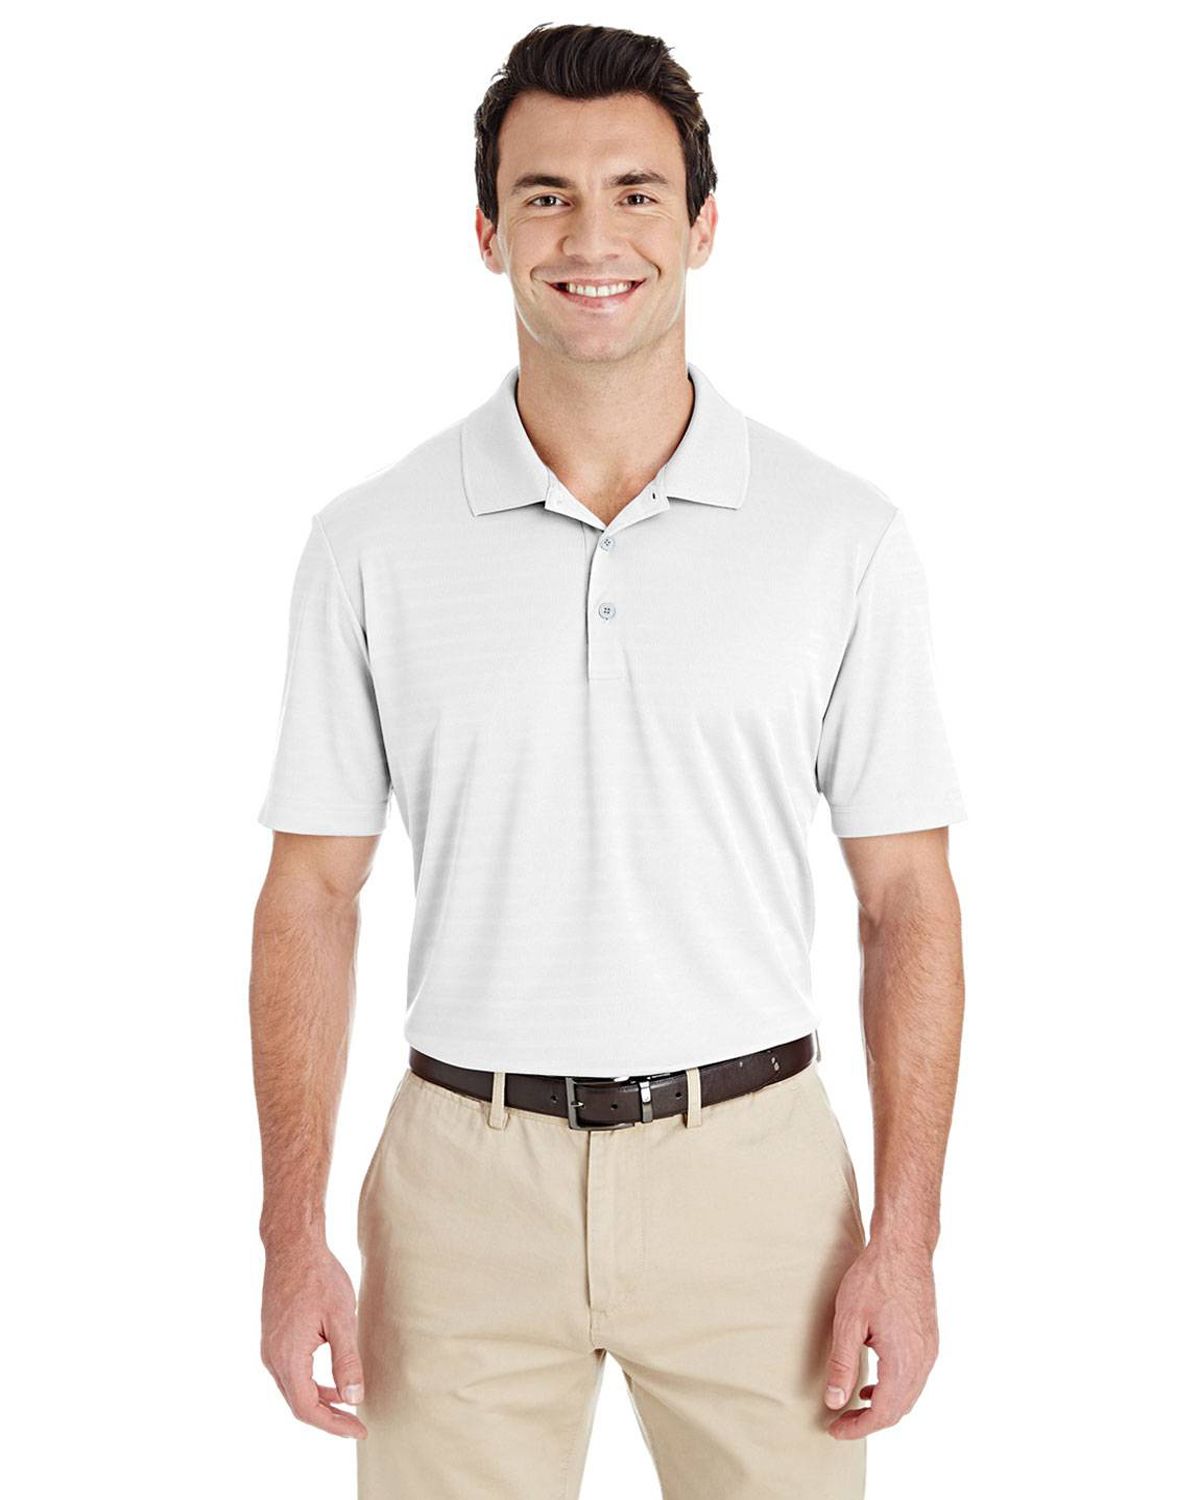 Adidas Golf A261 Men's Micro Stripe Polo Shirt